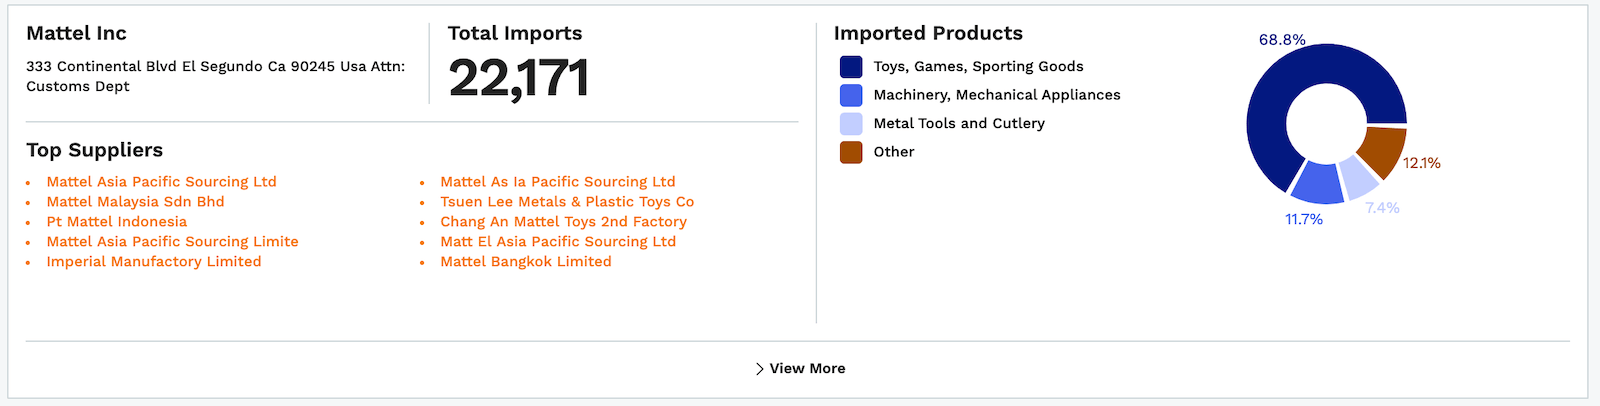 Mattel imports from China